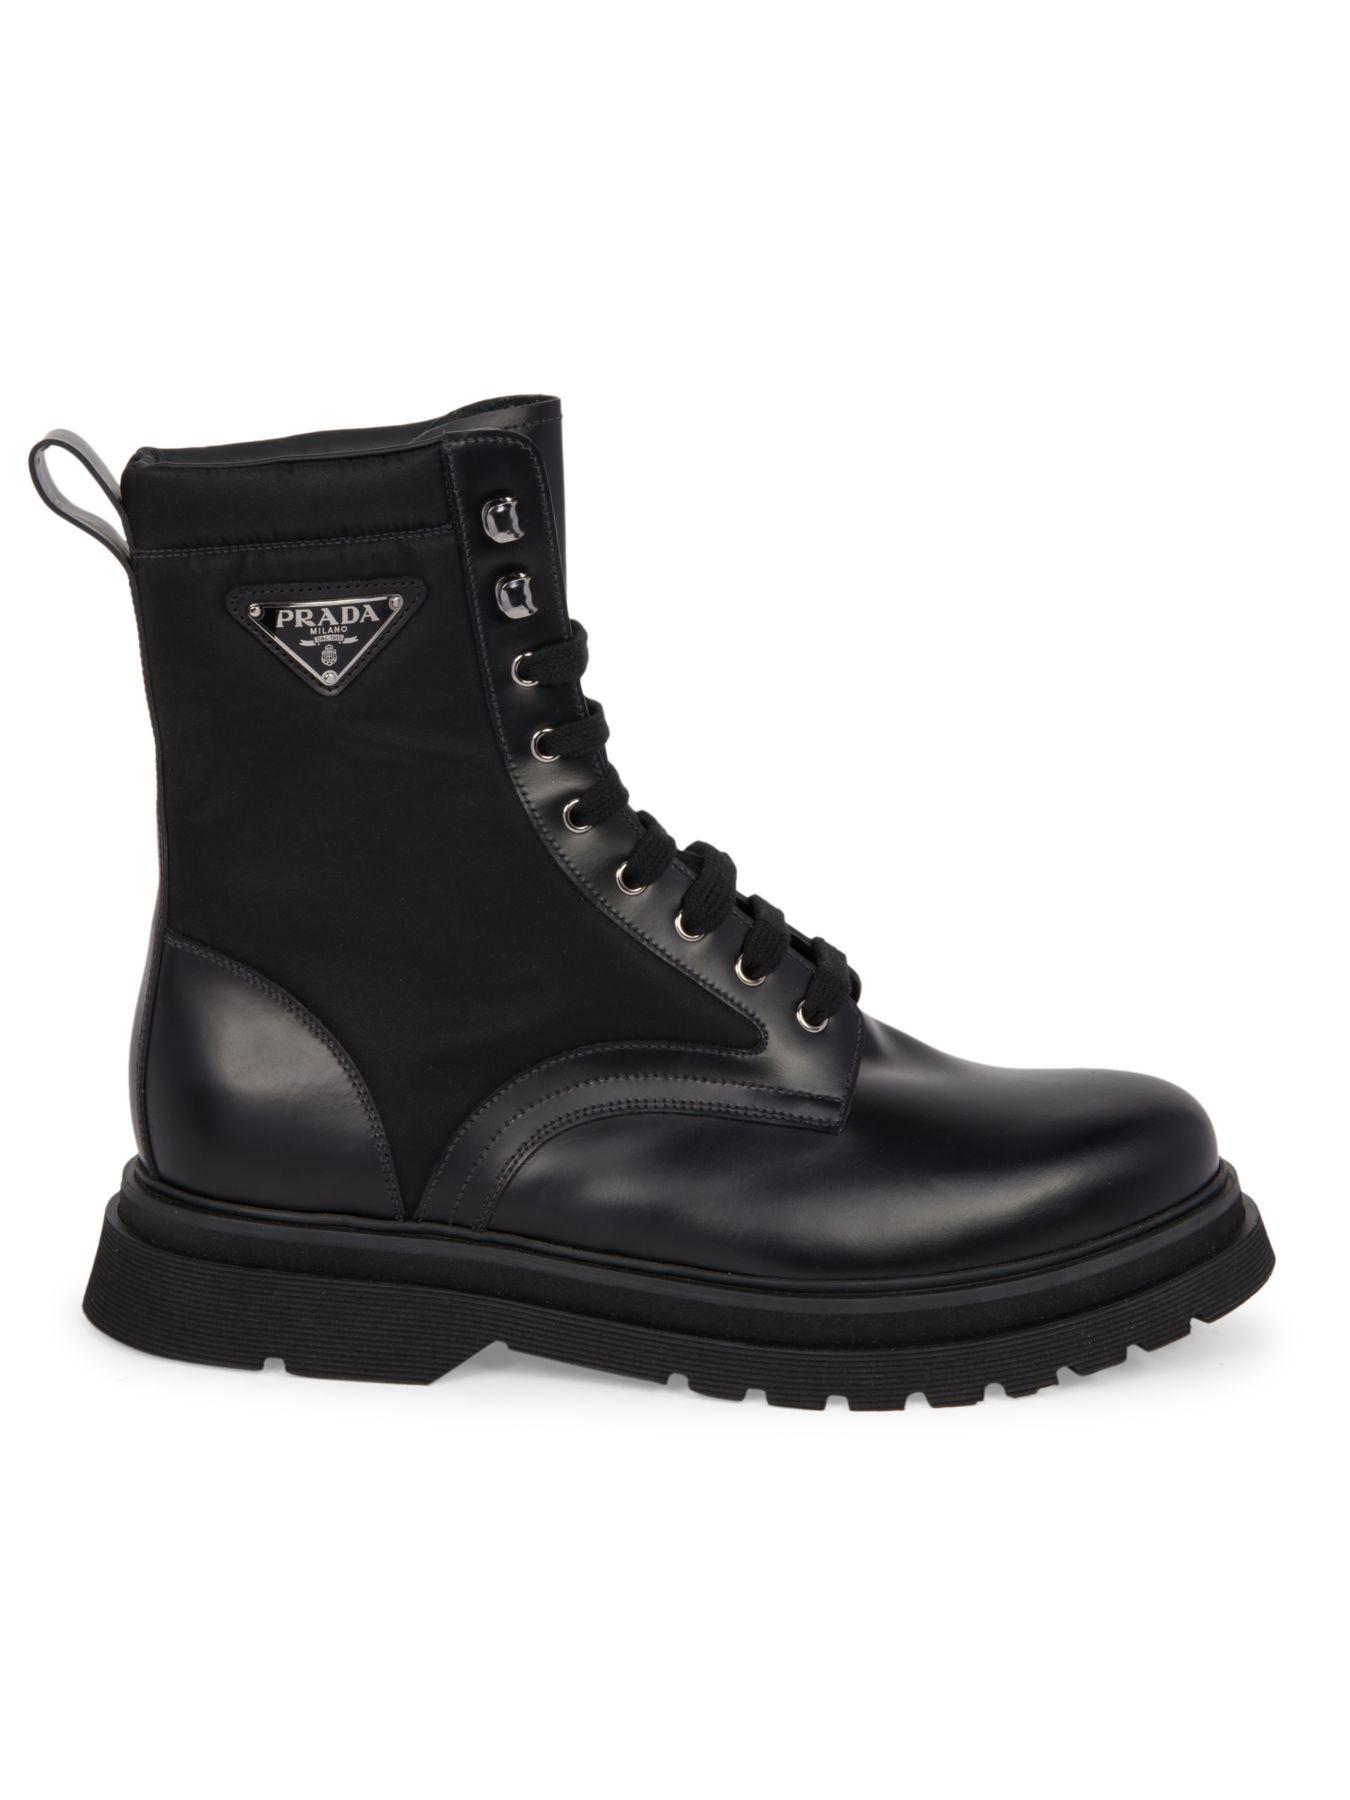 Prada Leather Millerighe Combat Boots in Nero (Black) for Men - Lyst